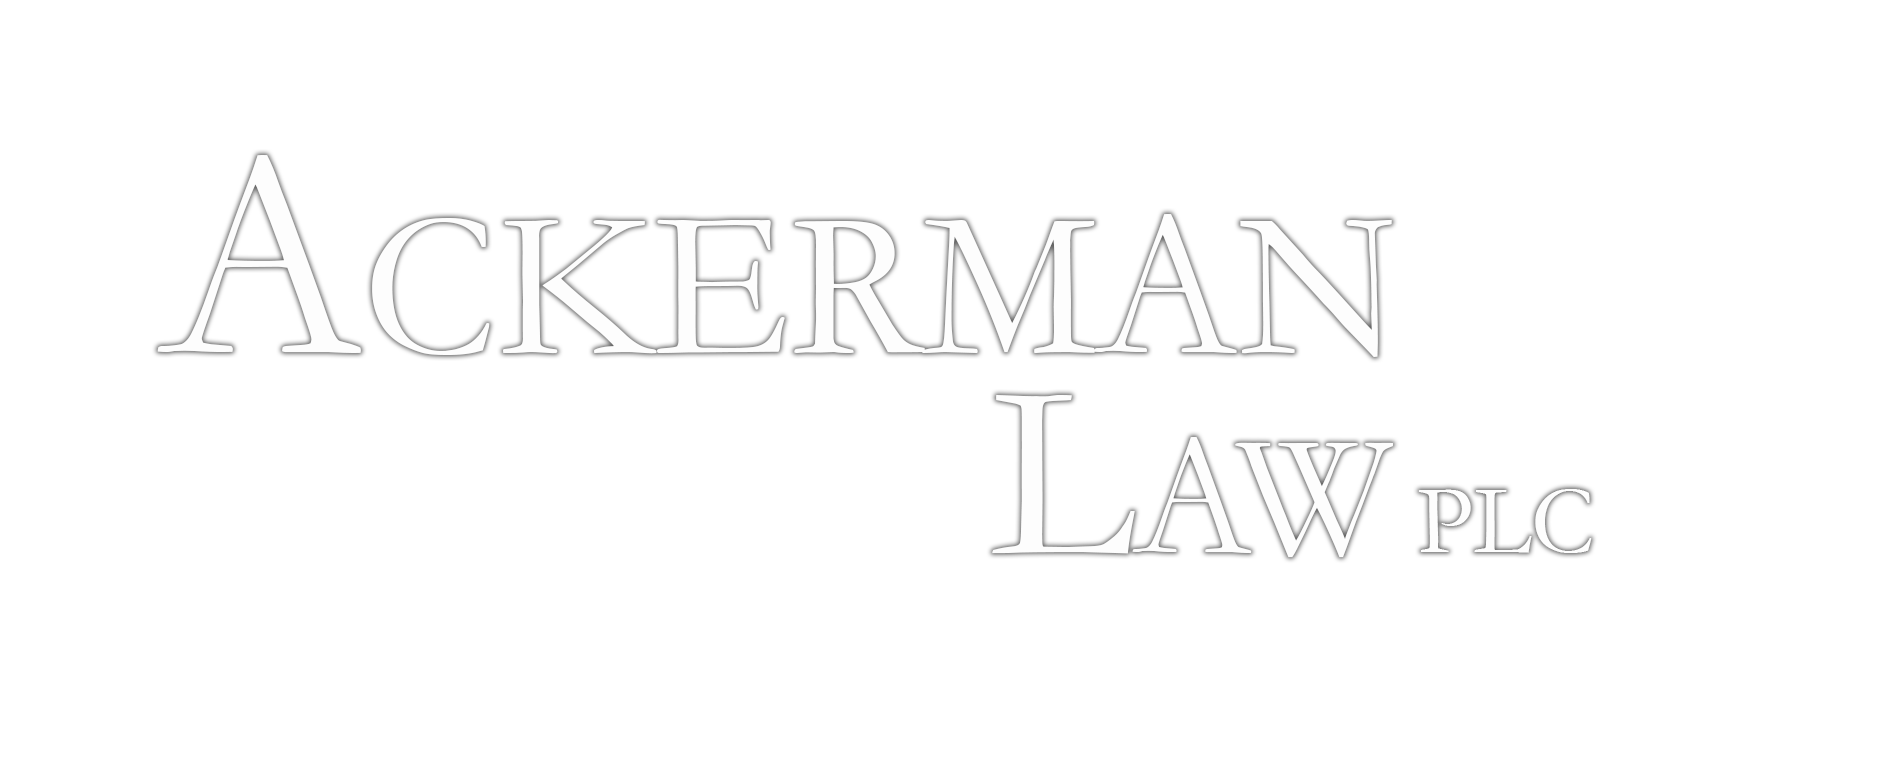 Ackerman Law PLC